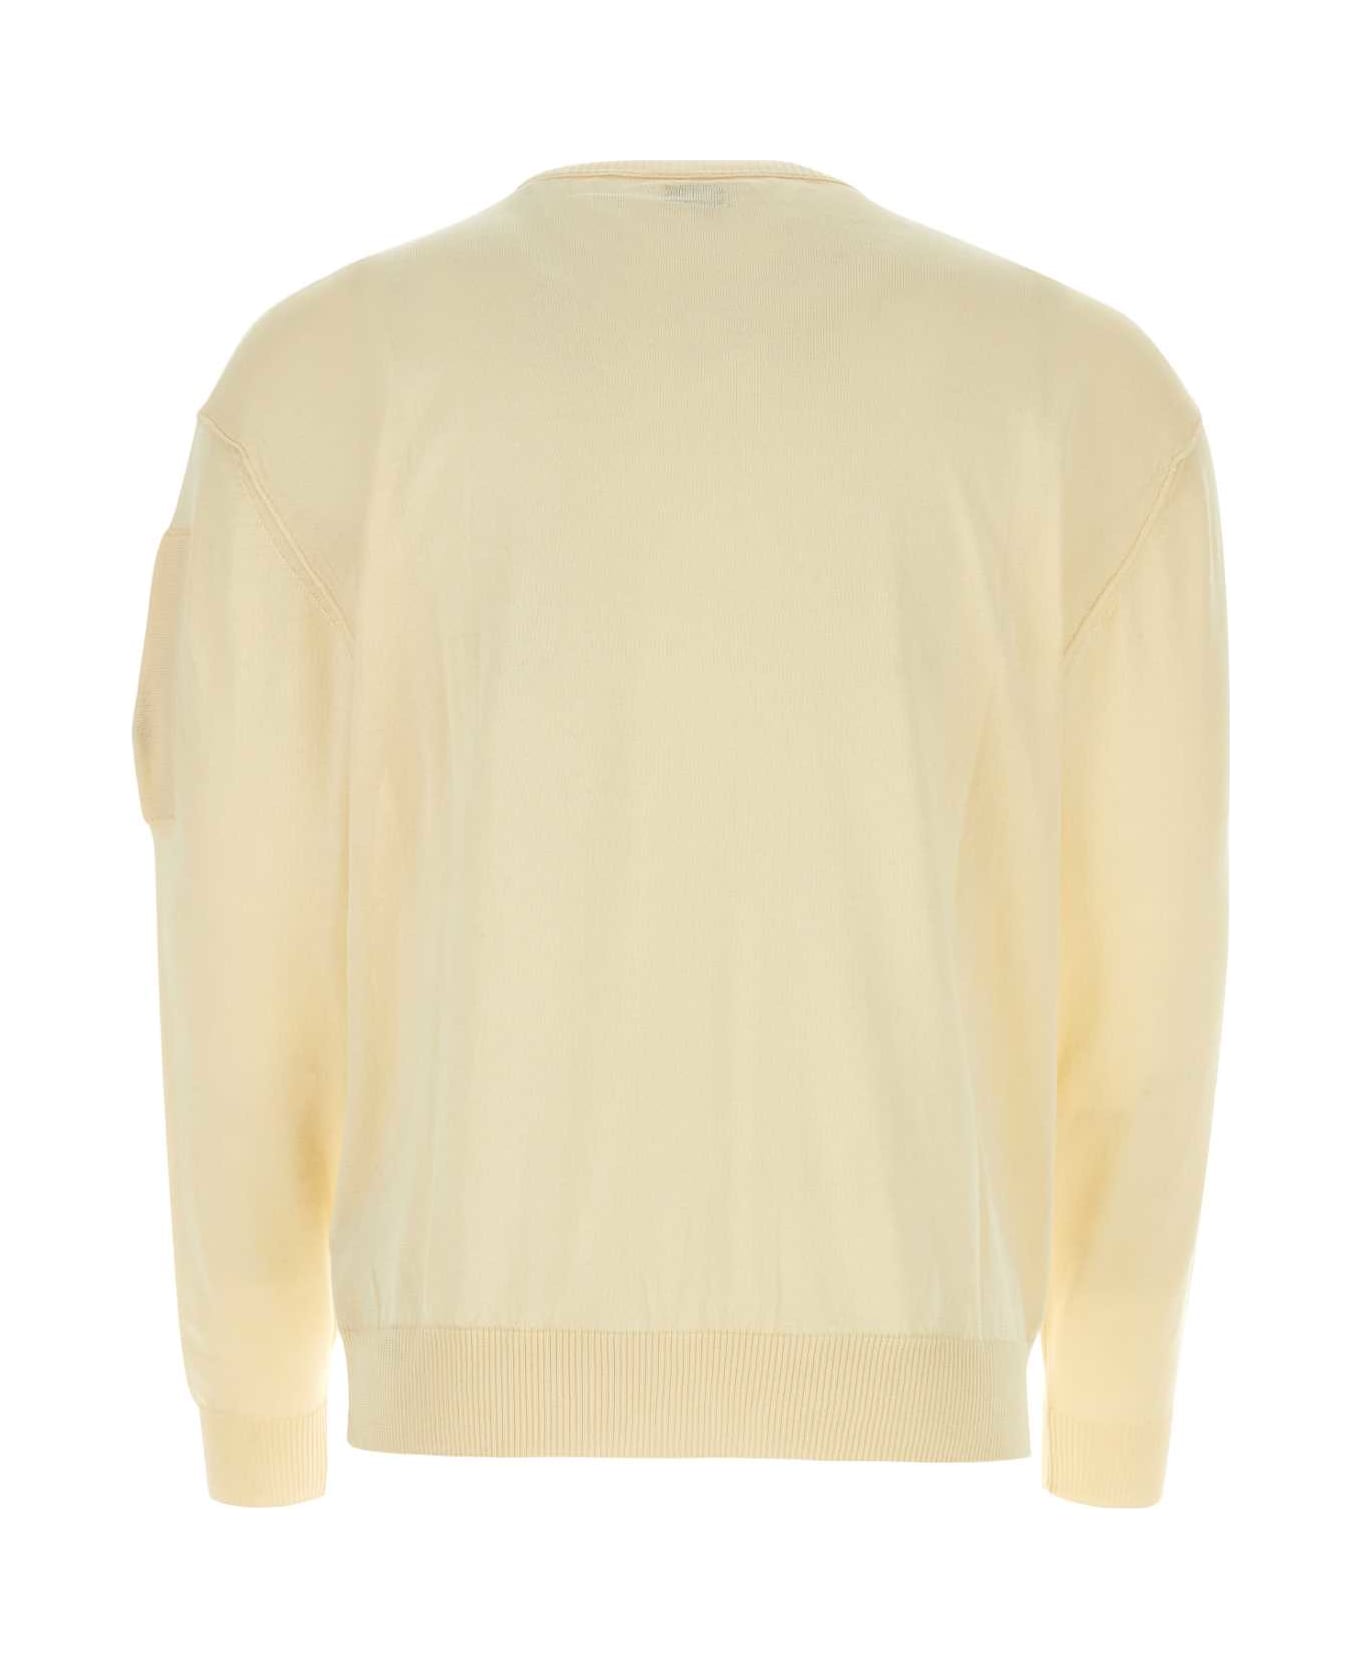 C.P. Company Pastel Yellow Cotton Sweater - GAUZEWHITE